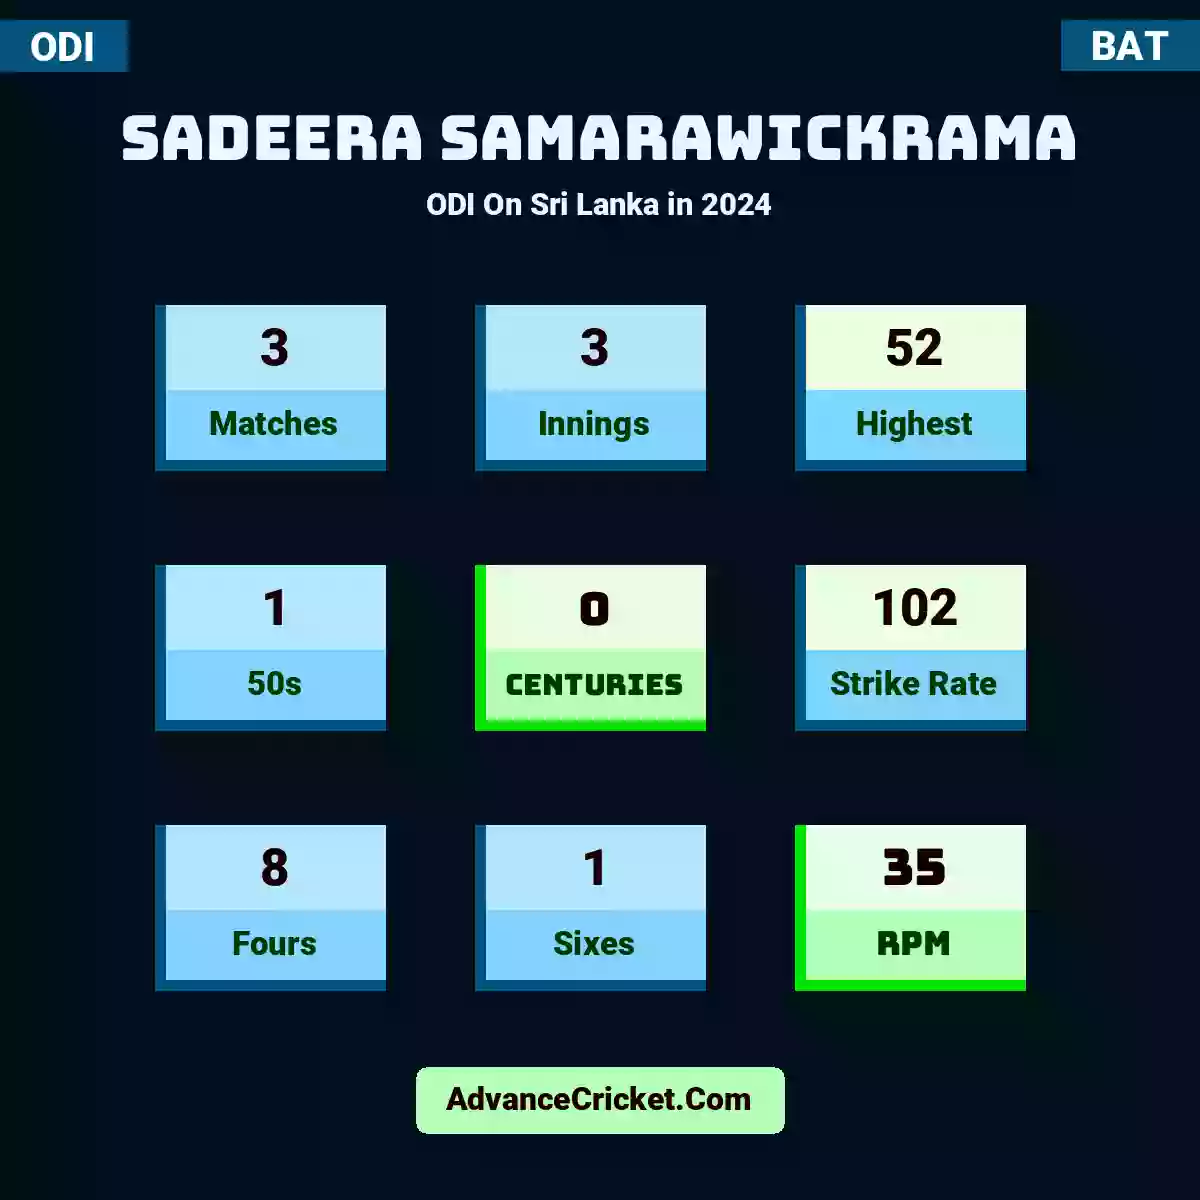 Sadeera Samarawickrama ODI  On Sri Lanka in 2024, Sadeera Samarawickrama played 3 matches, scored 52 runs as highest, 1 half-centuries, and 0 centuries, with a strike rate of 102. S.Samarawickrama hit 8 fours and 1 sixes, with an RPM of 35.